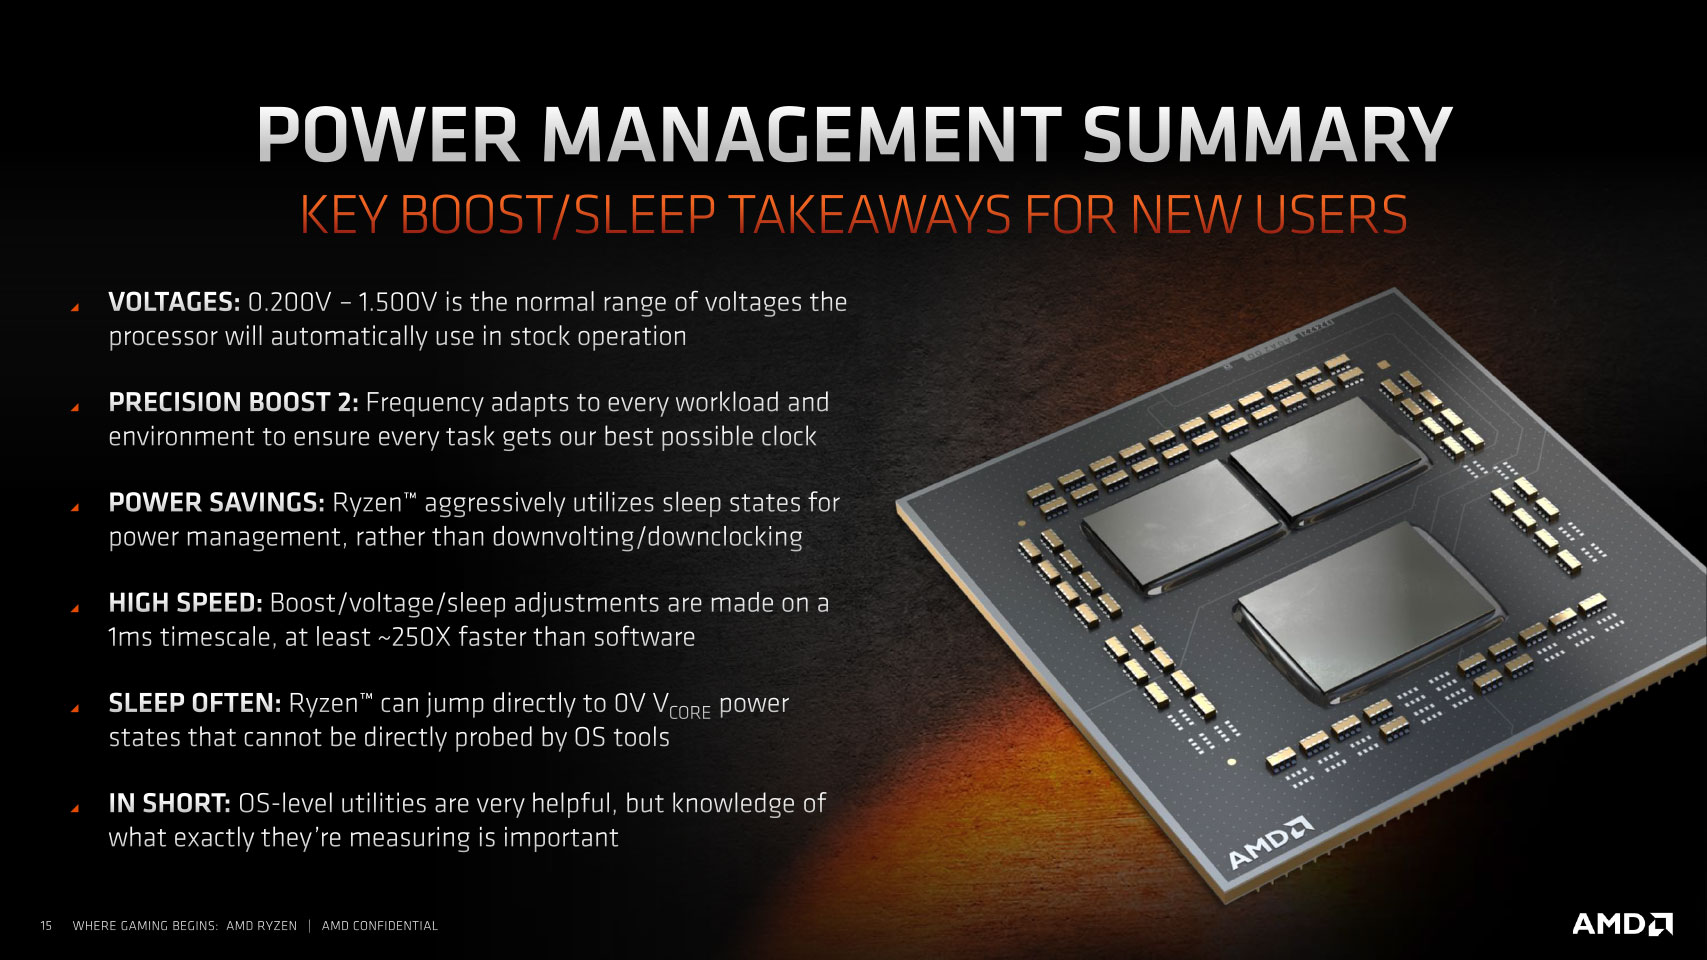 AMD Ryzen 5 5600X Specs  TechPowerUp CPU Database